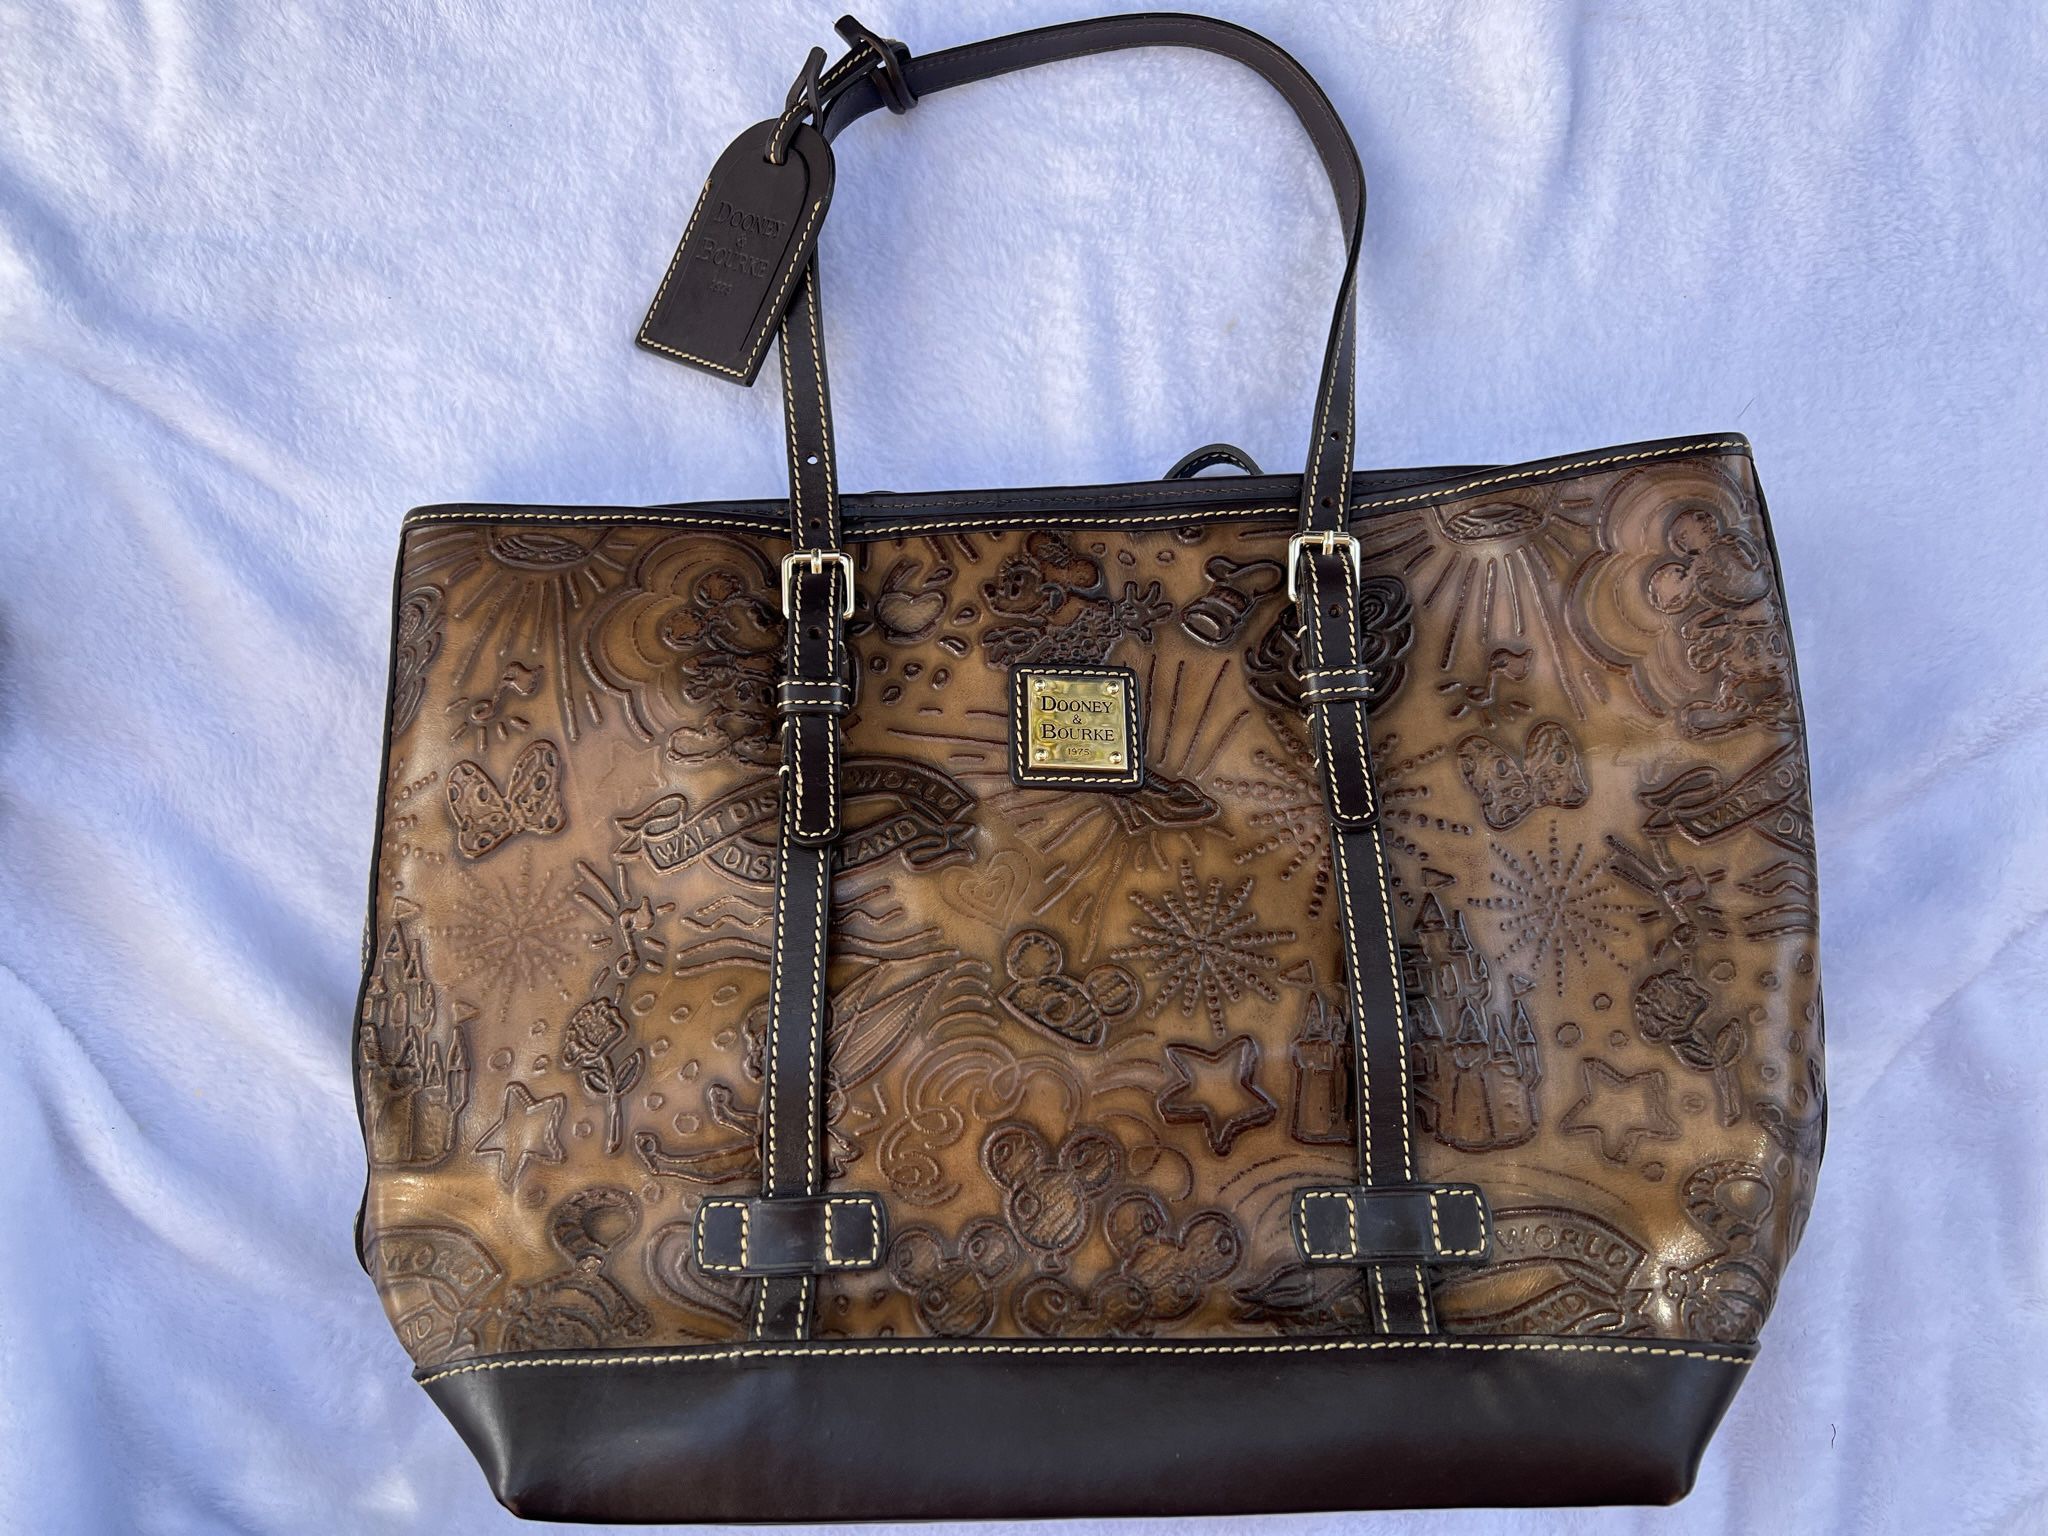 Louis Vuitton Passenger Bag for Sale in Henderson, NV - OfferUp